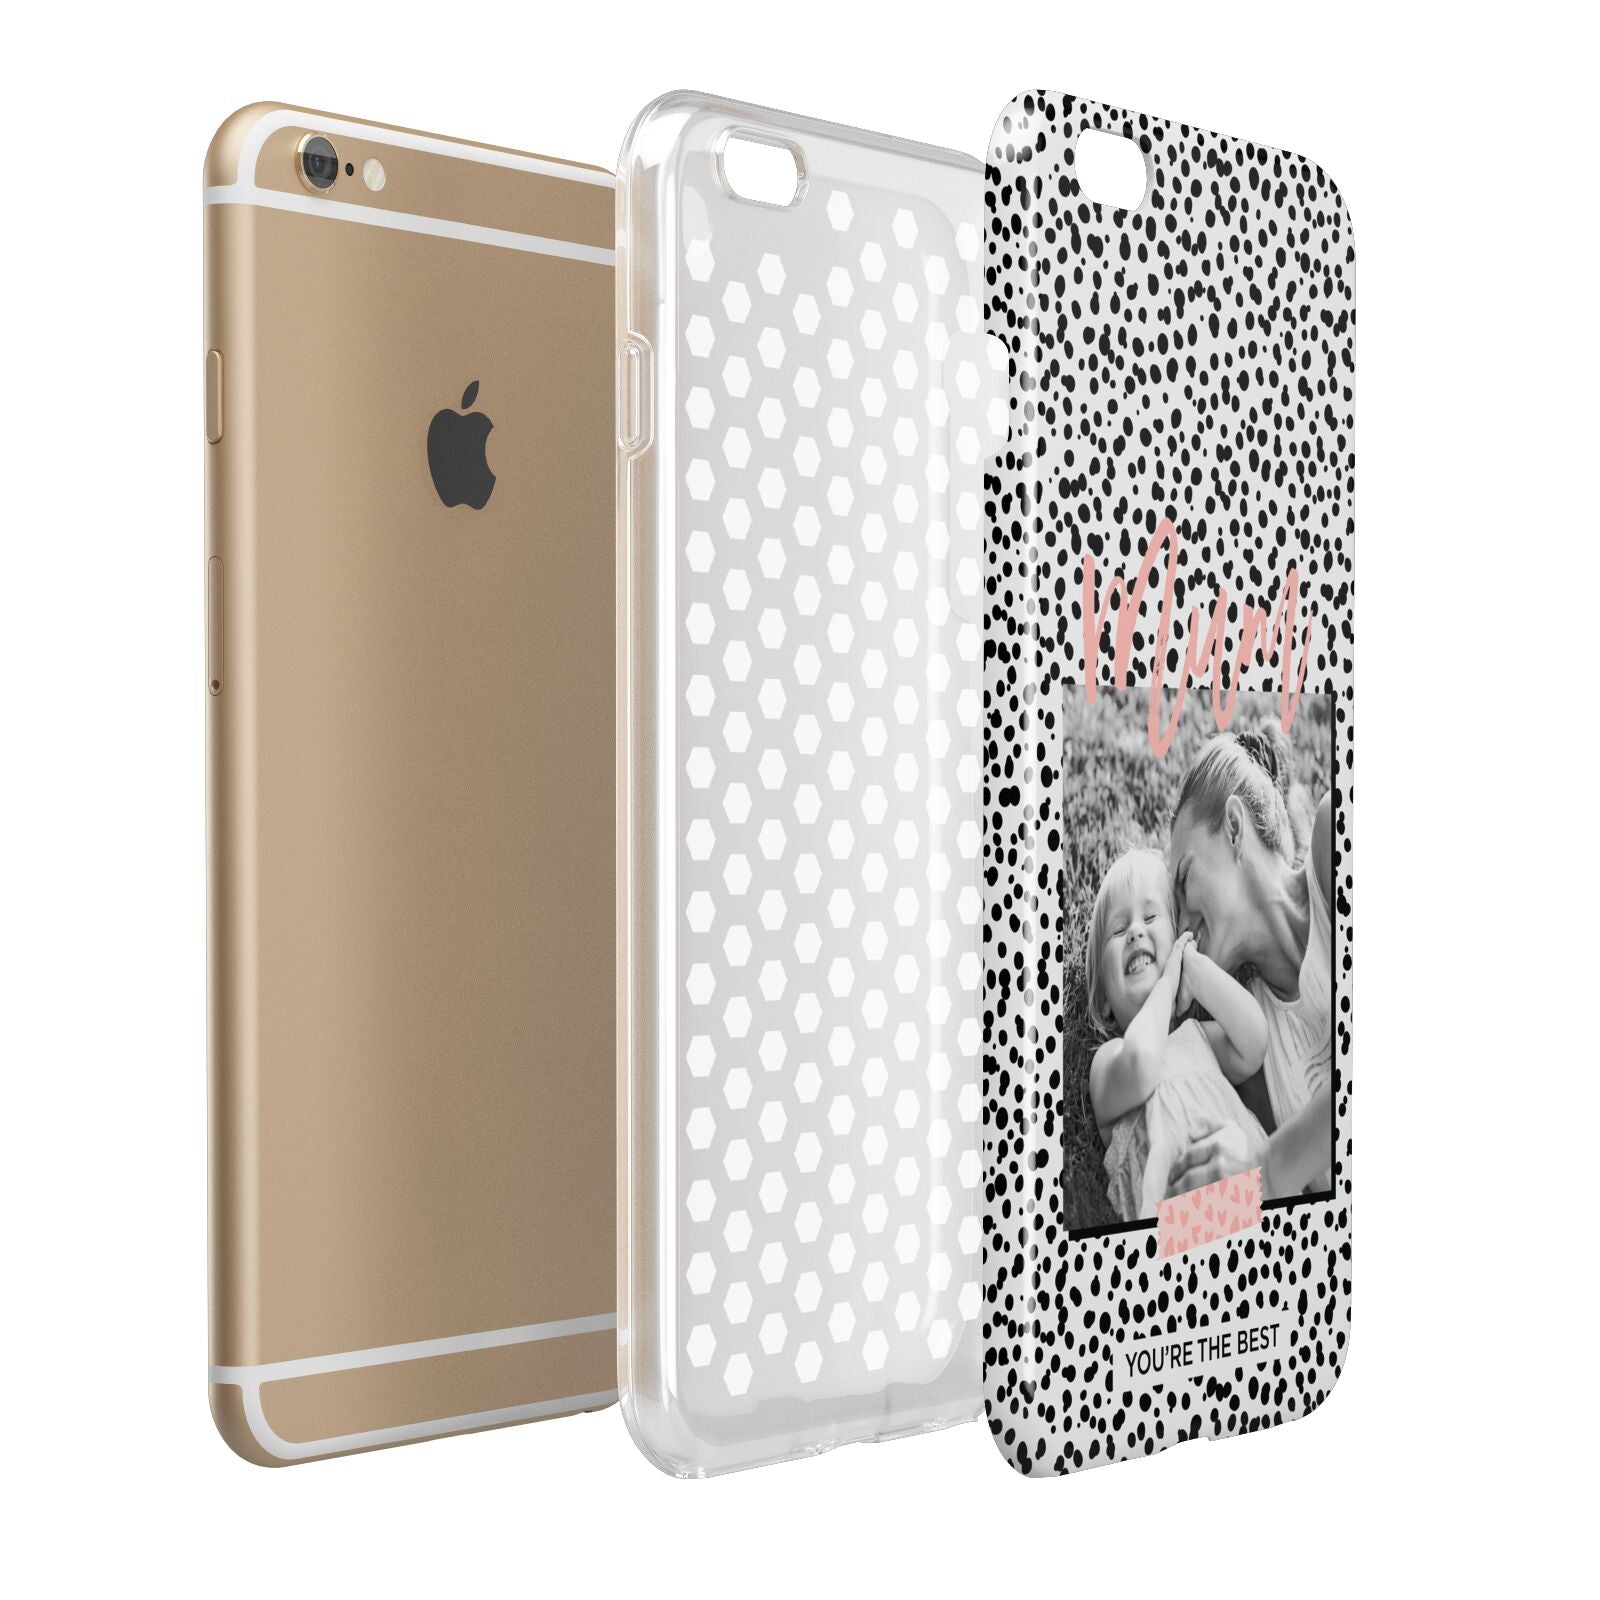 Polka Dot Mum Apple iPhone 6 Plus 3D Tough Case Expand Detail Image